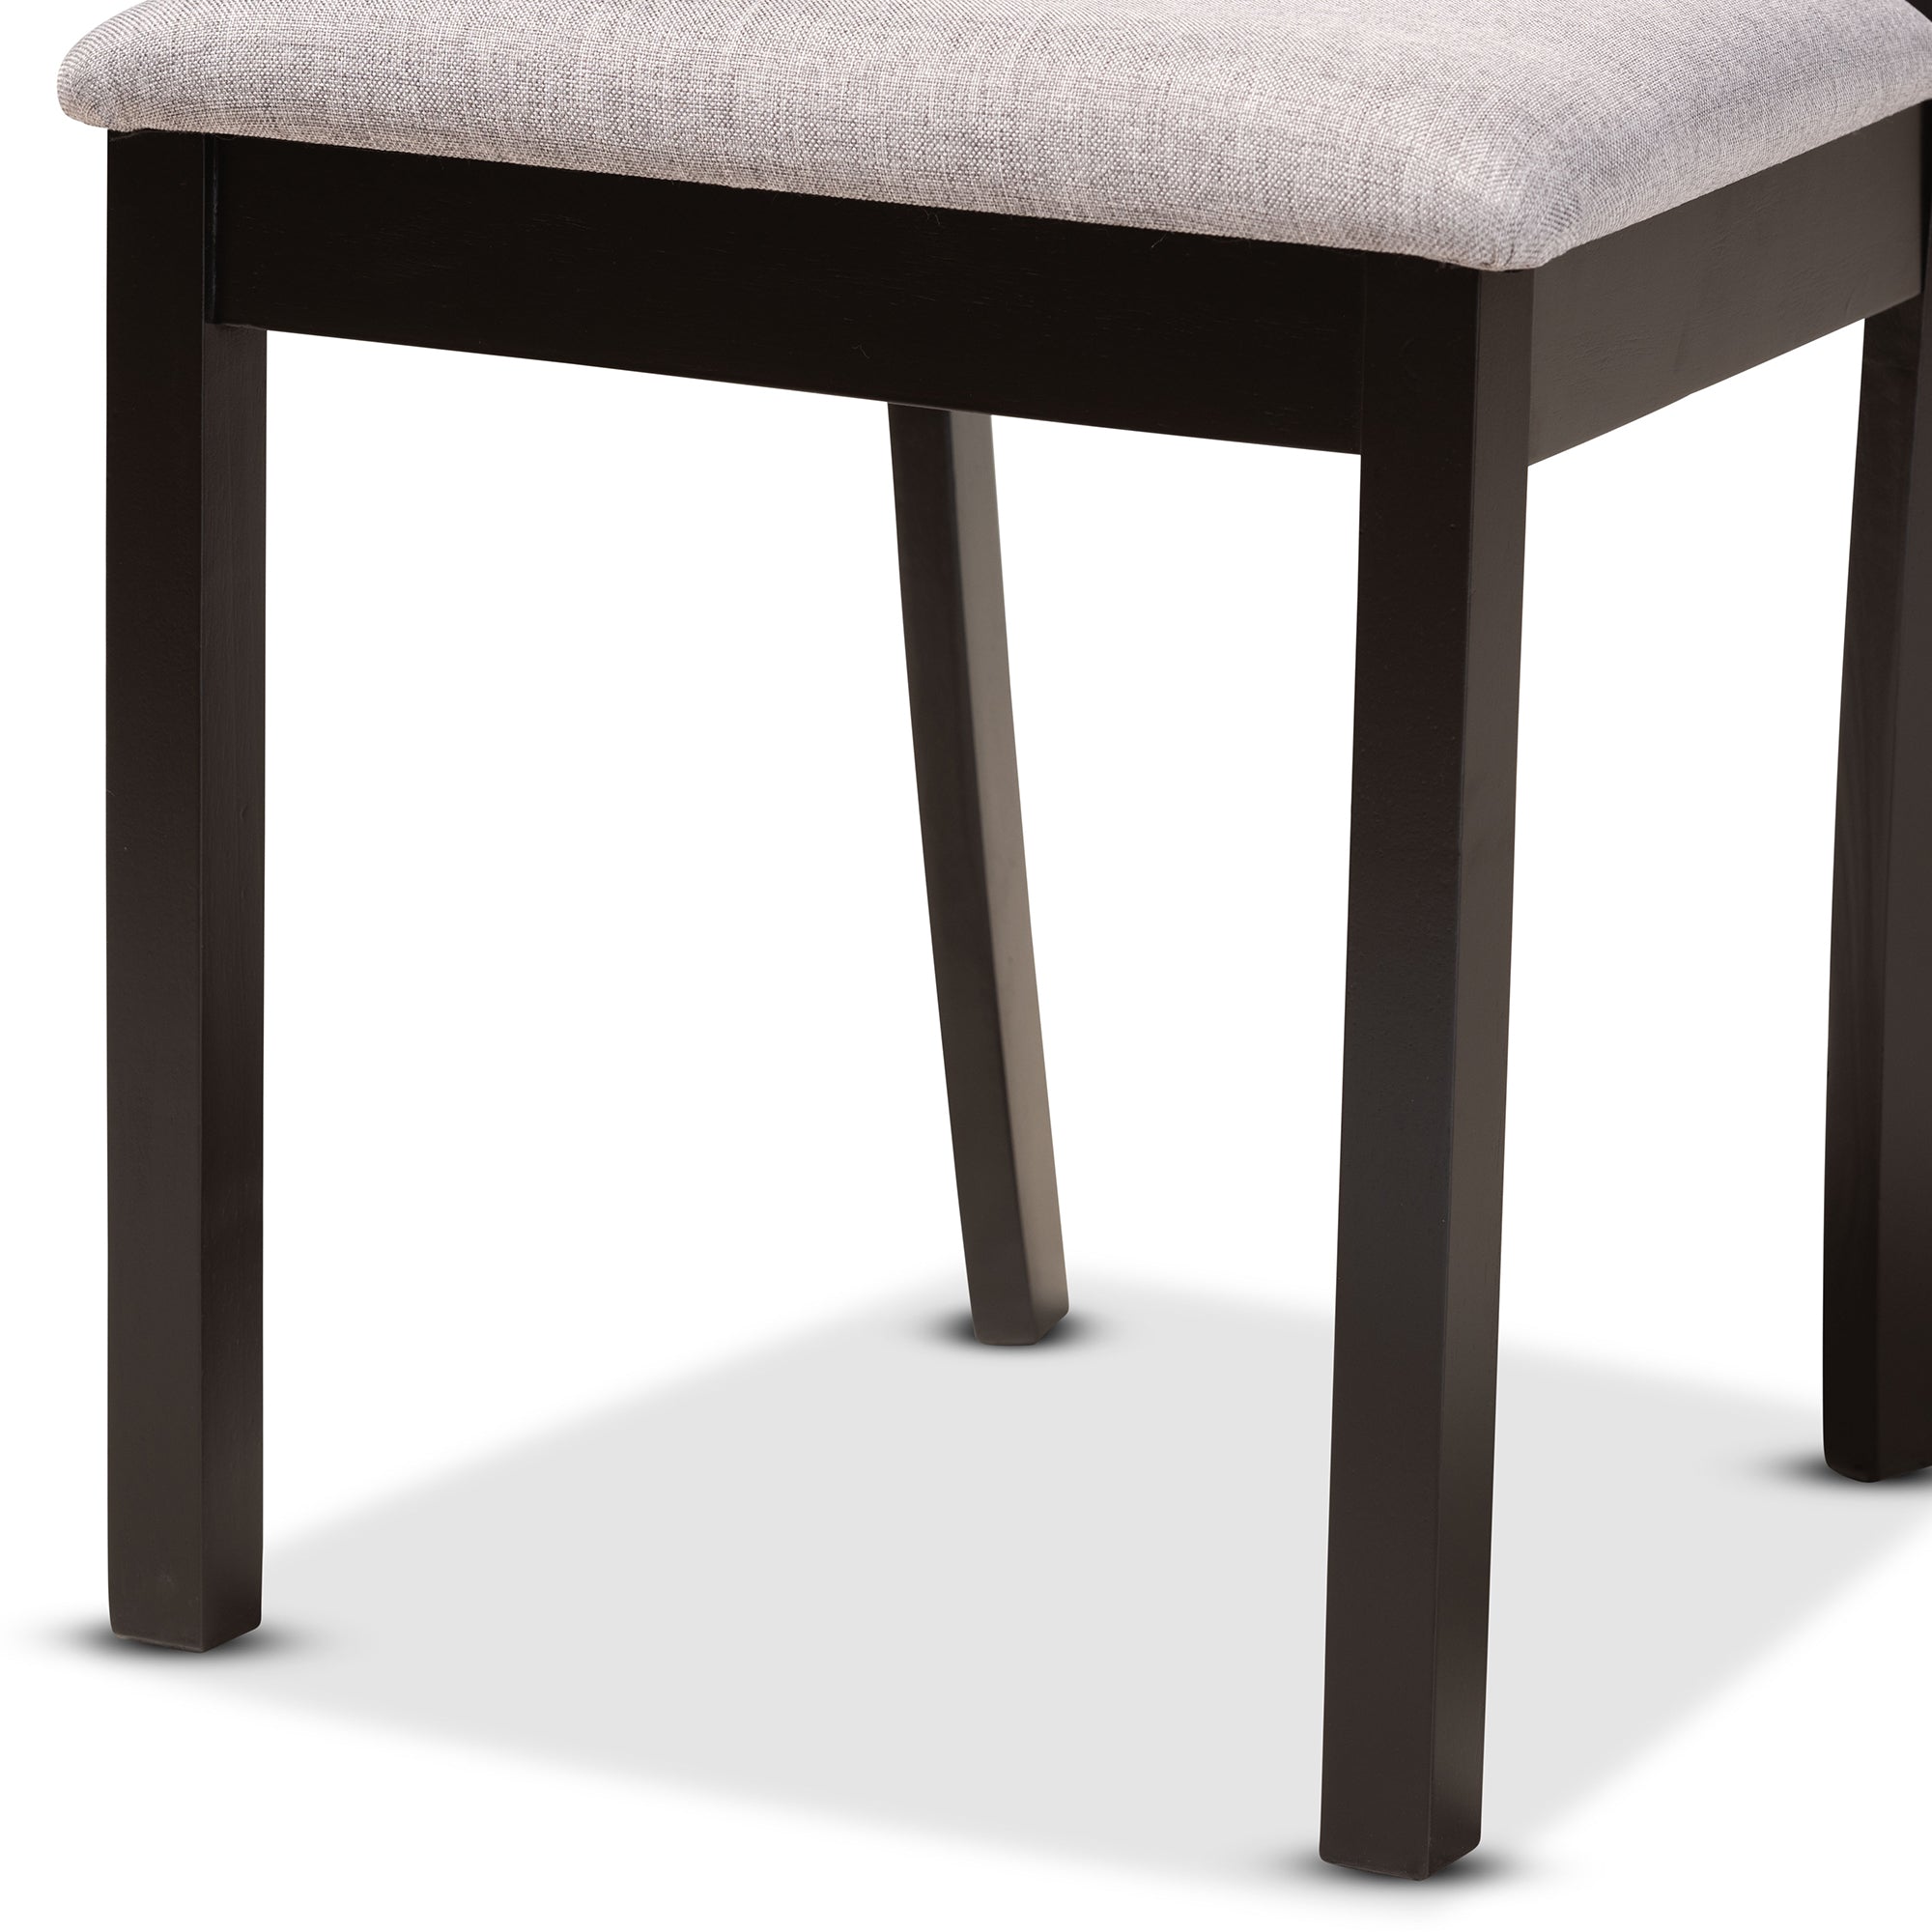 Telma Modern Table & Dining Chairs 5-Piece-Dining Set-Baxton Studio - WI-Wall2Wall Furnishings